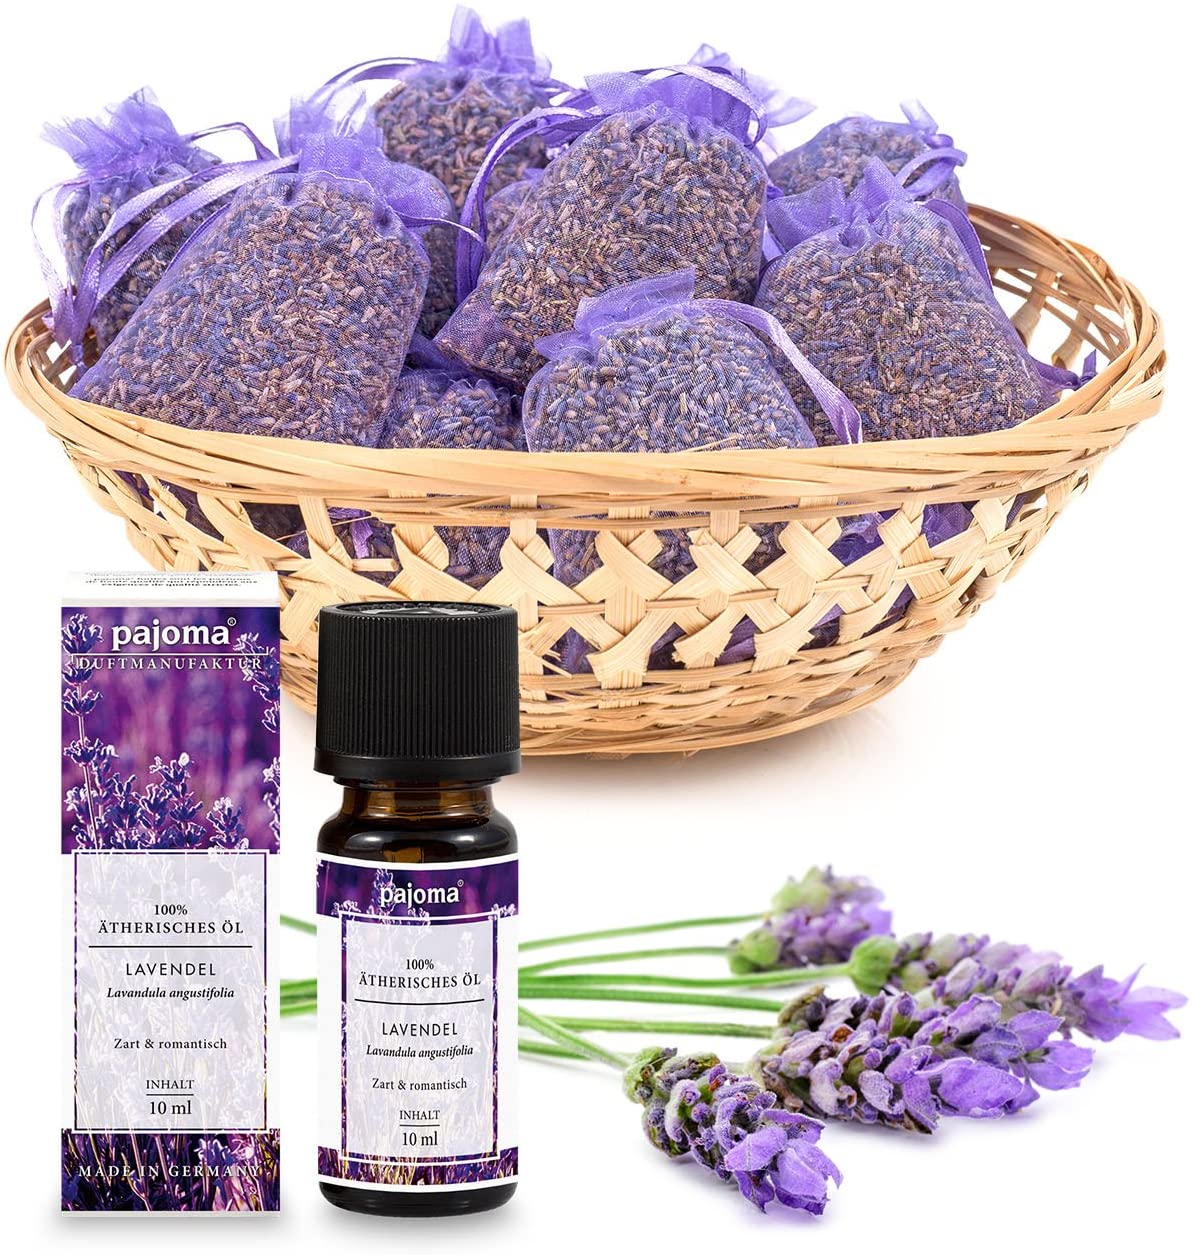 pajoma Lavender set, 10 x scented sachets of lavender plus 1 x lavender essential oil, 10 ml, 100% natural